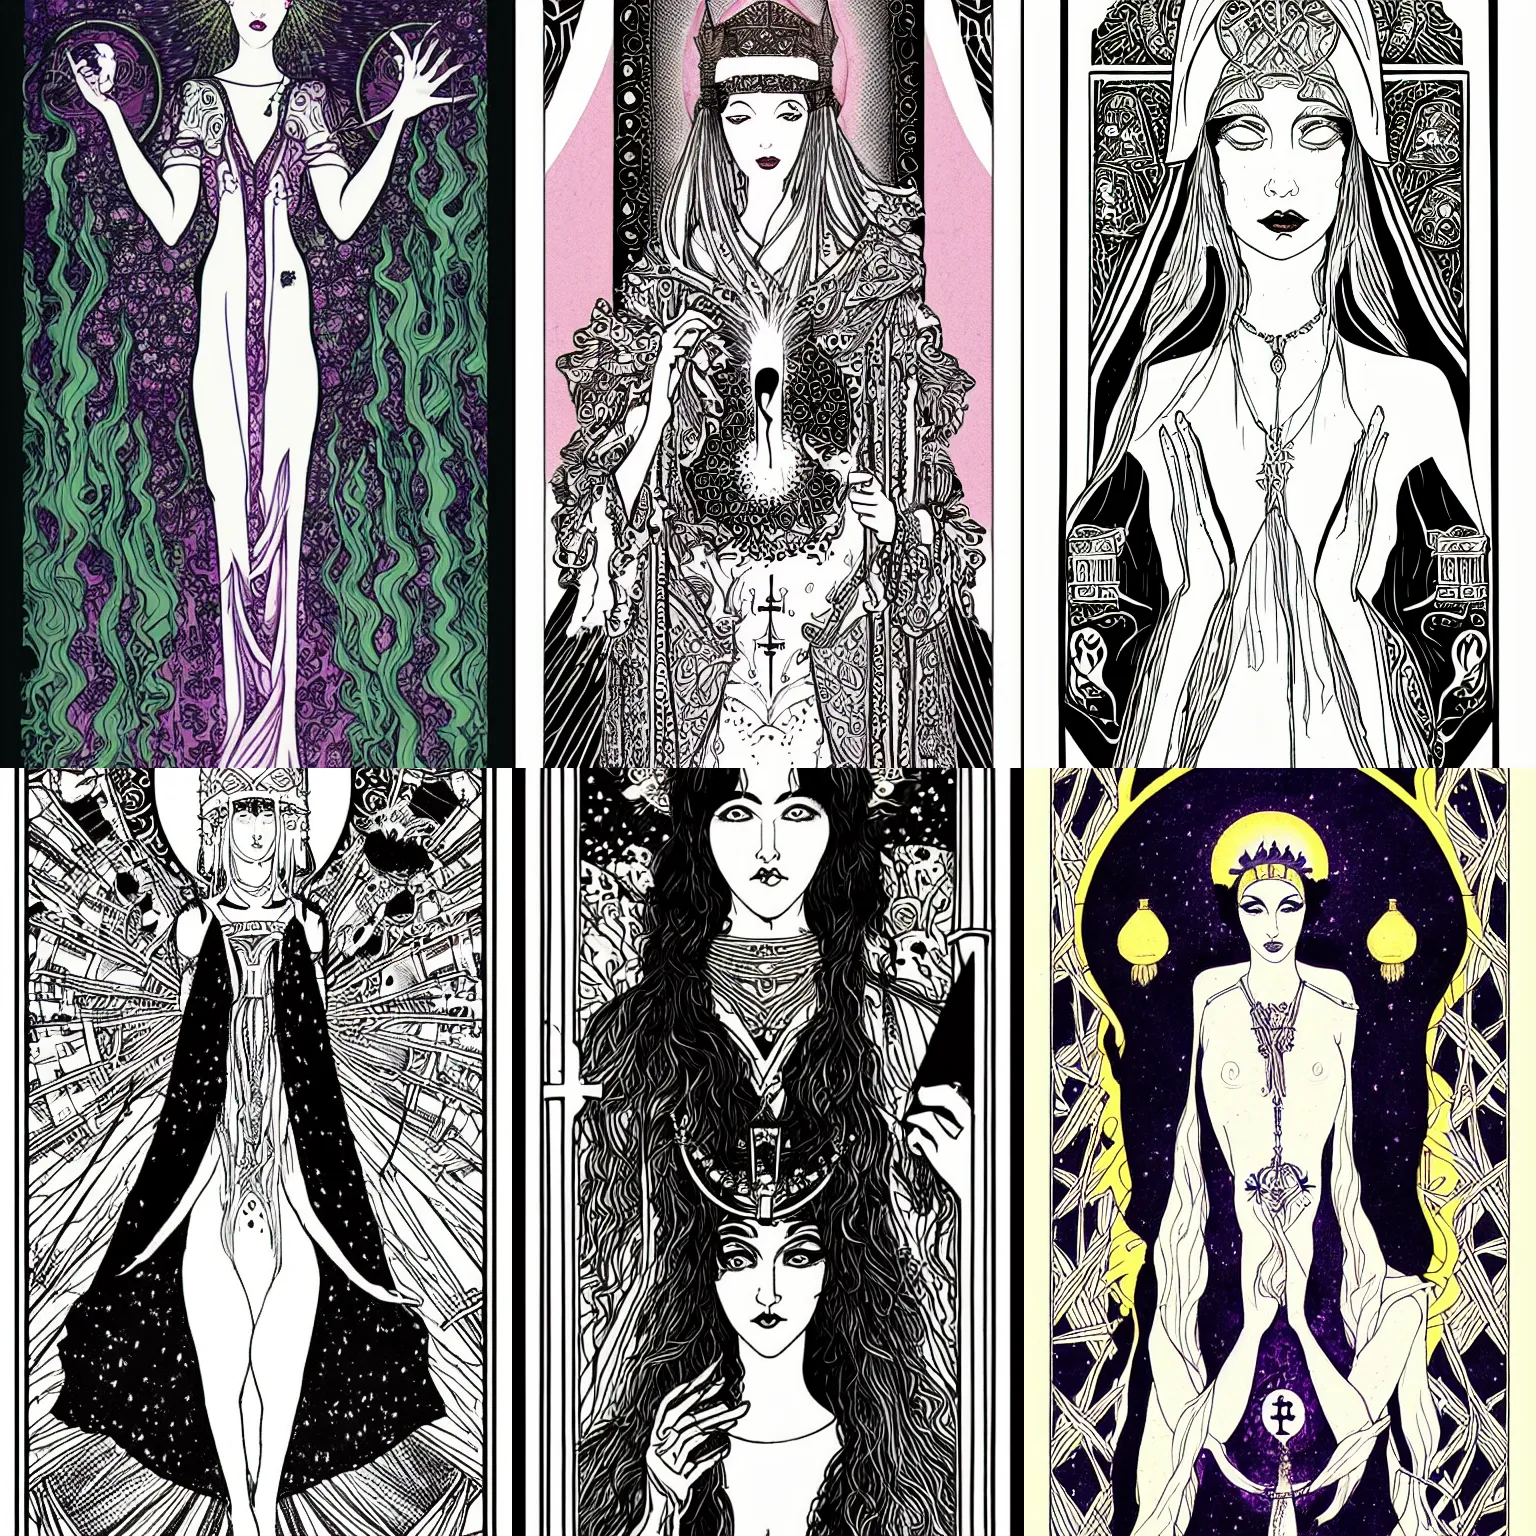 Prompt: High priestess tarot card, spiritual, 4k digital illustration by Aubrey Beardsley in the style of Kelly McKernan, Tarot Card, occult, iconography, intricate border designs, Artstation